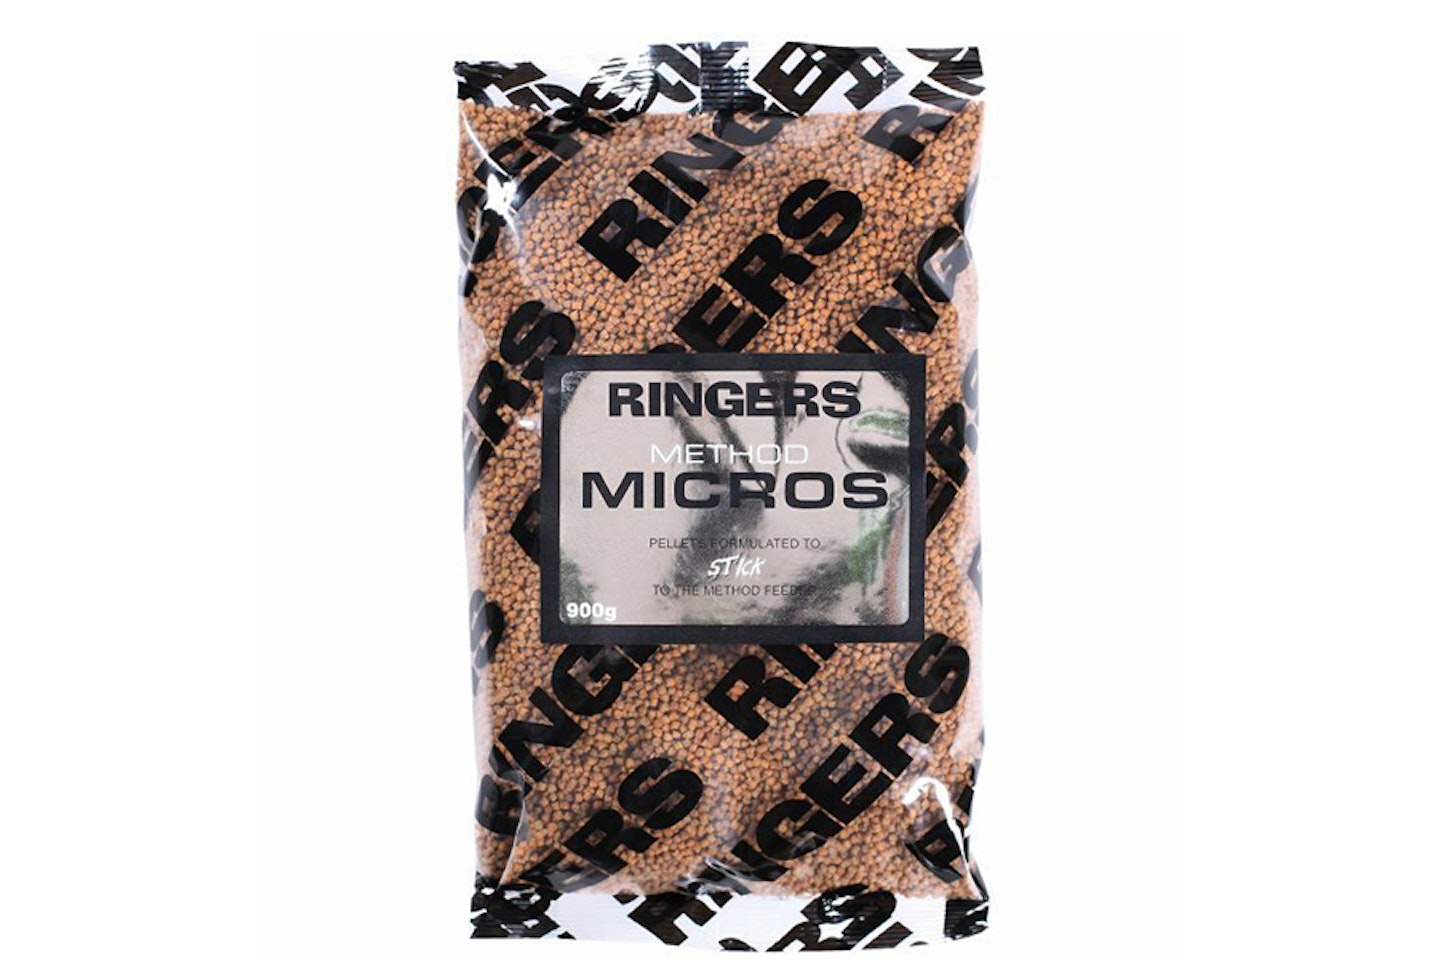 Ringers Method Micros 